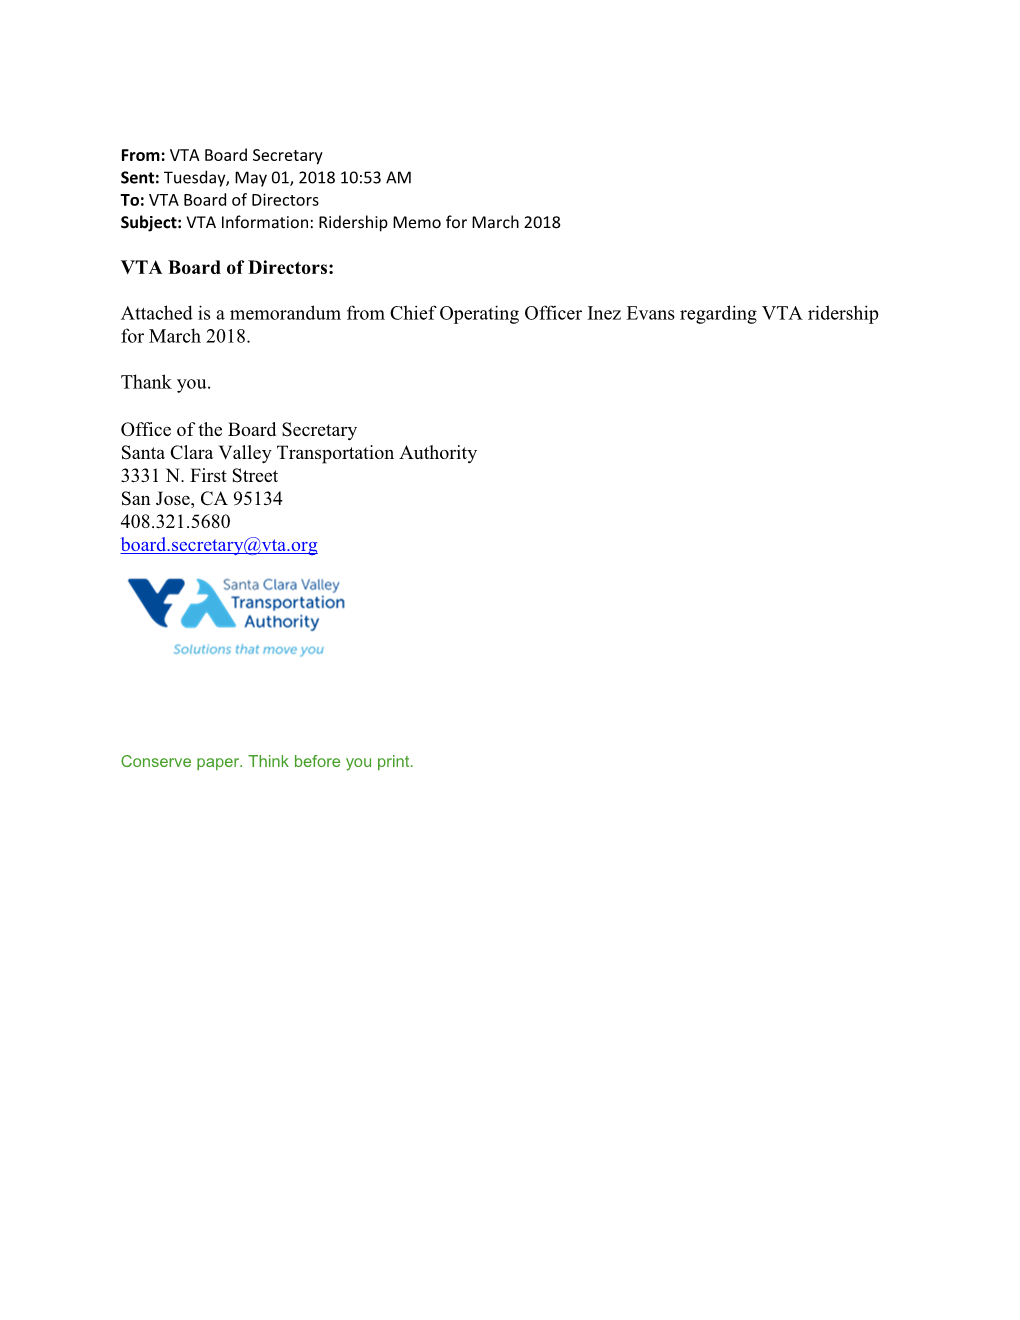 VTA Board of Directors Subject: VTA Information: Ridership Memo for March 2018